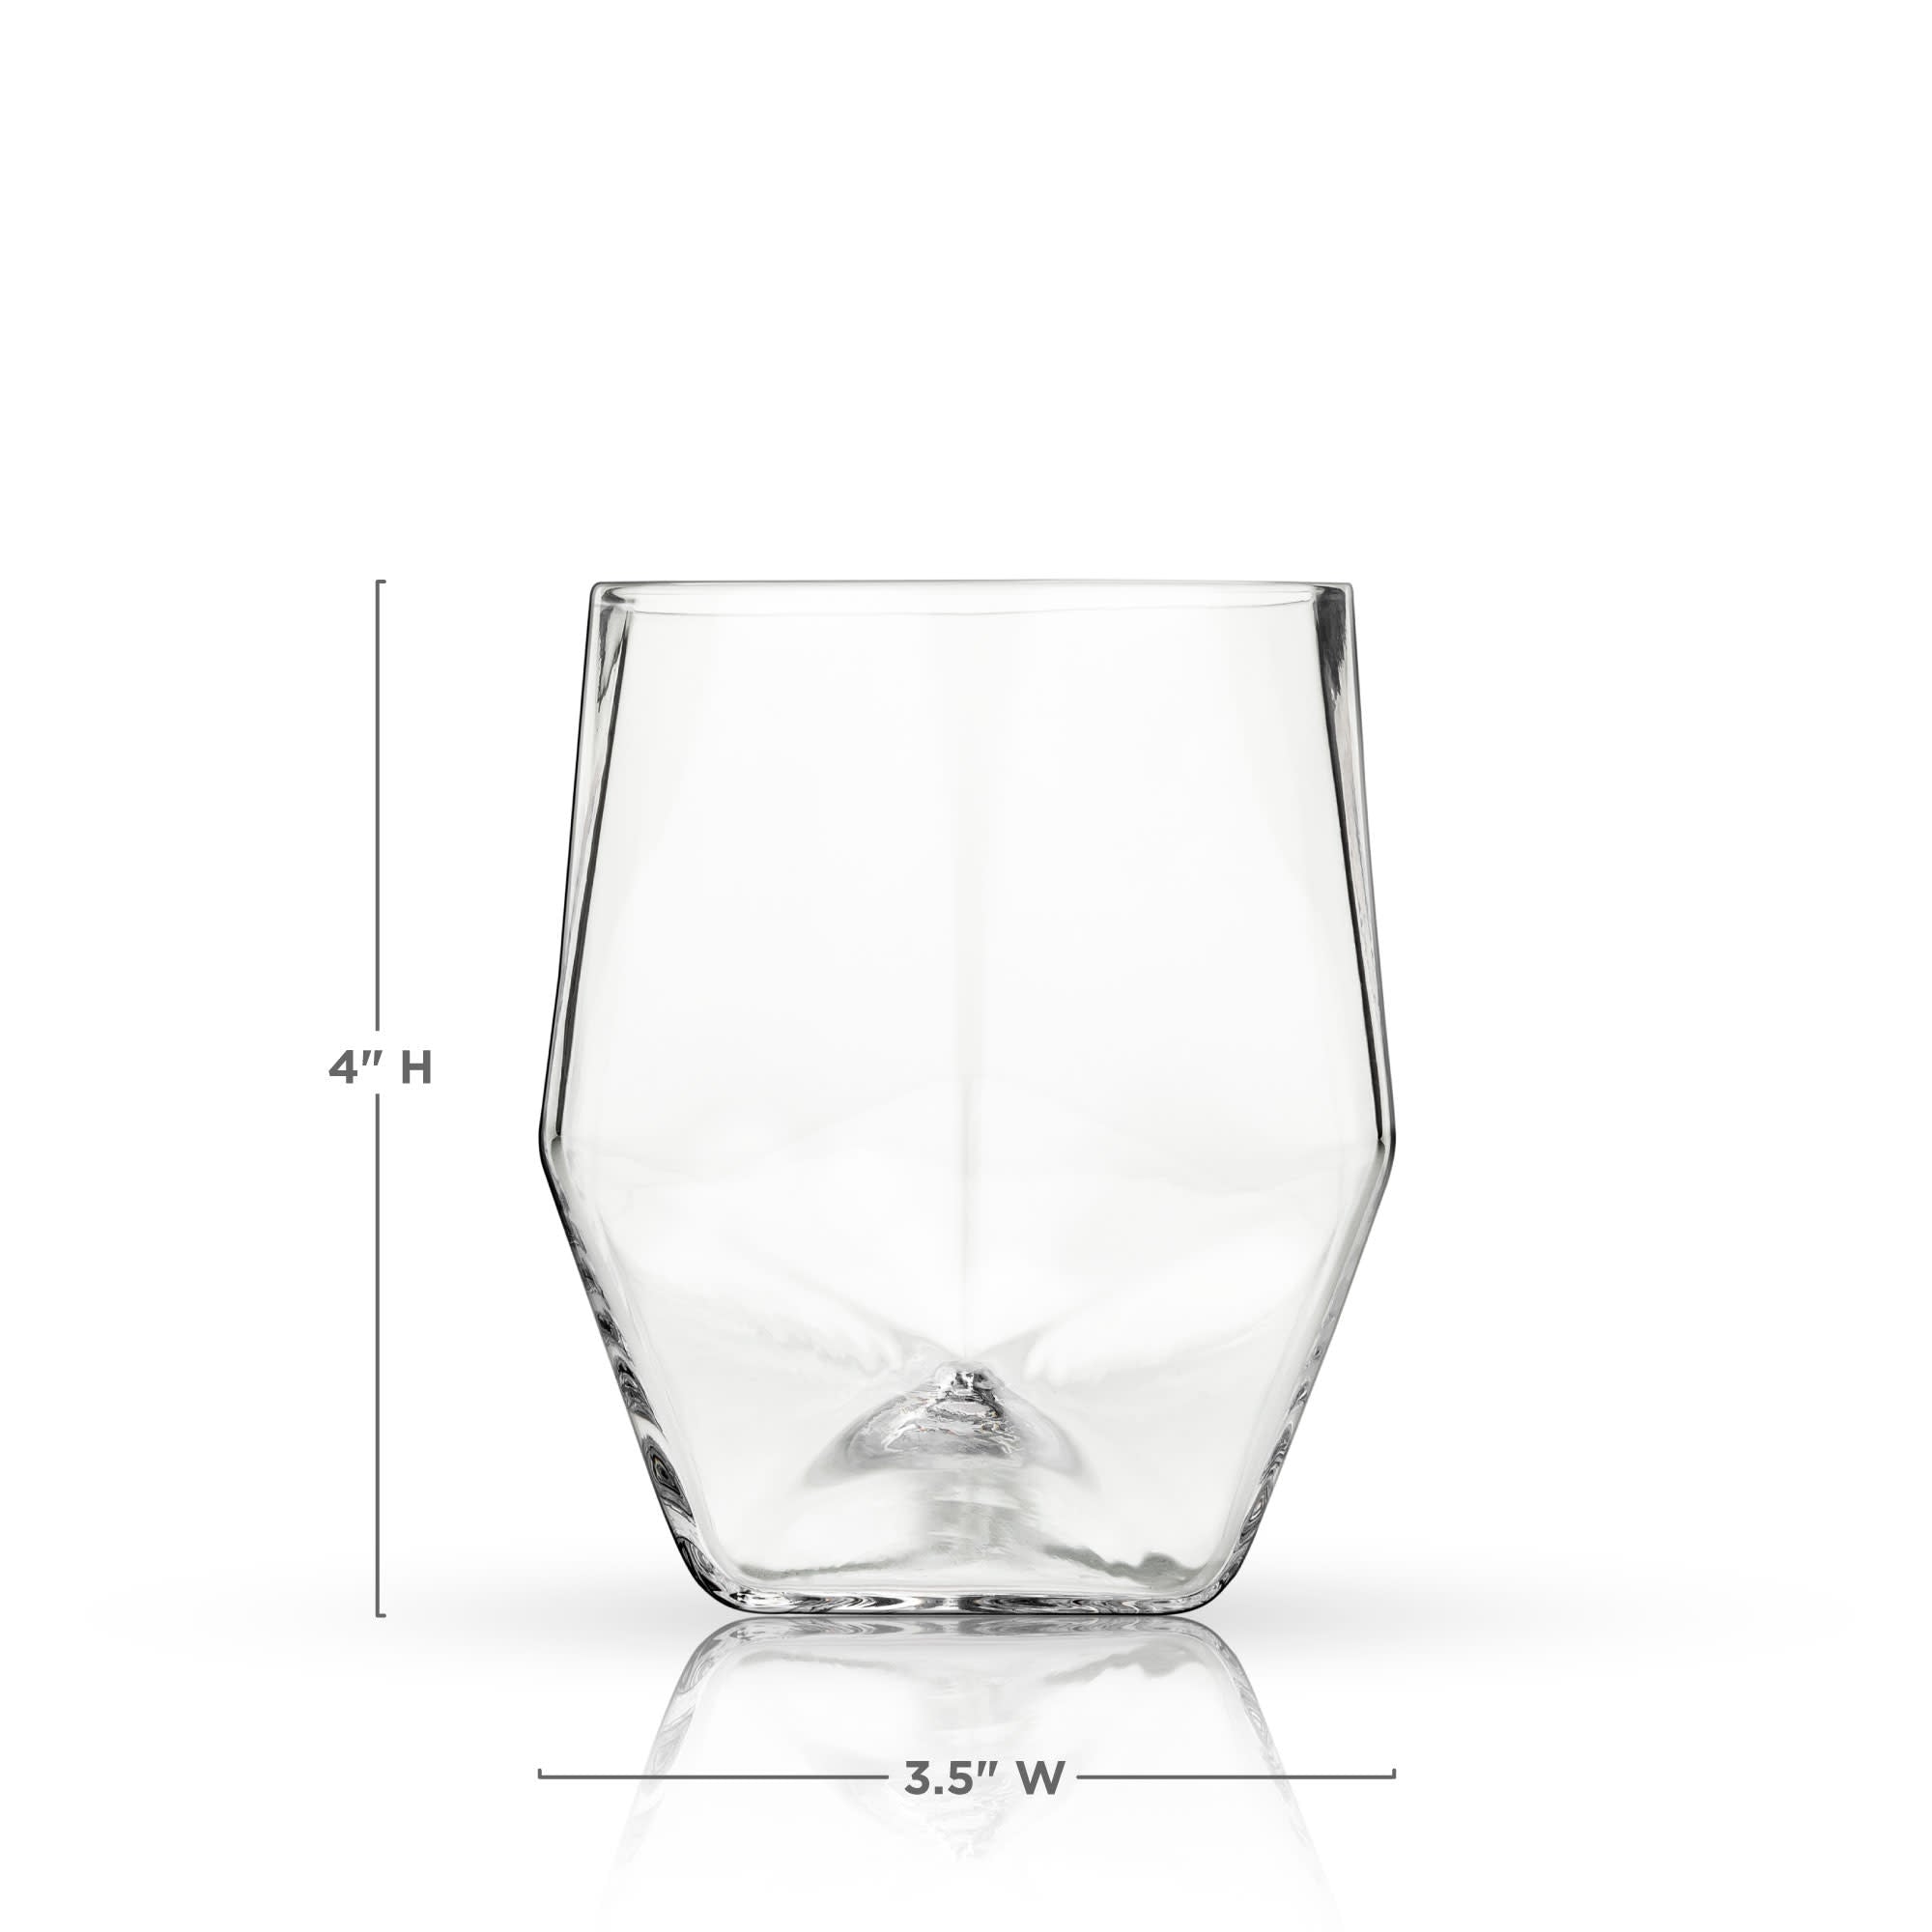 Faceted Crystal Tumblers by Viski® (4343) Drinkware Viski